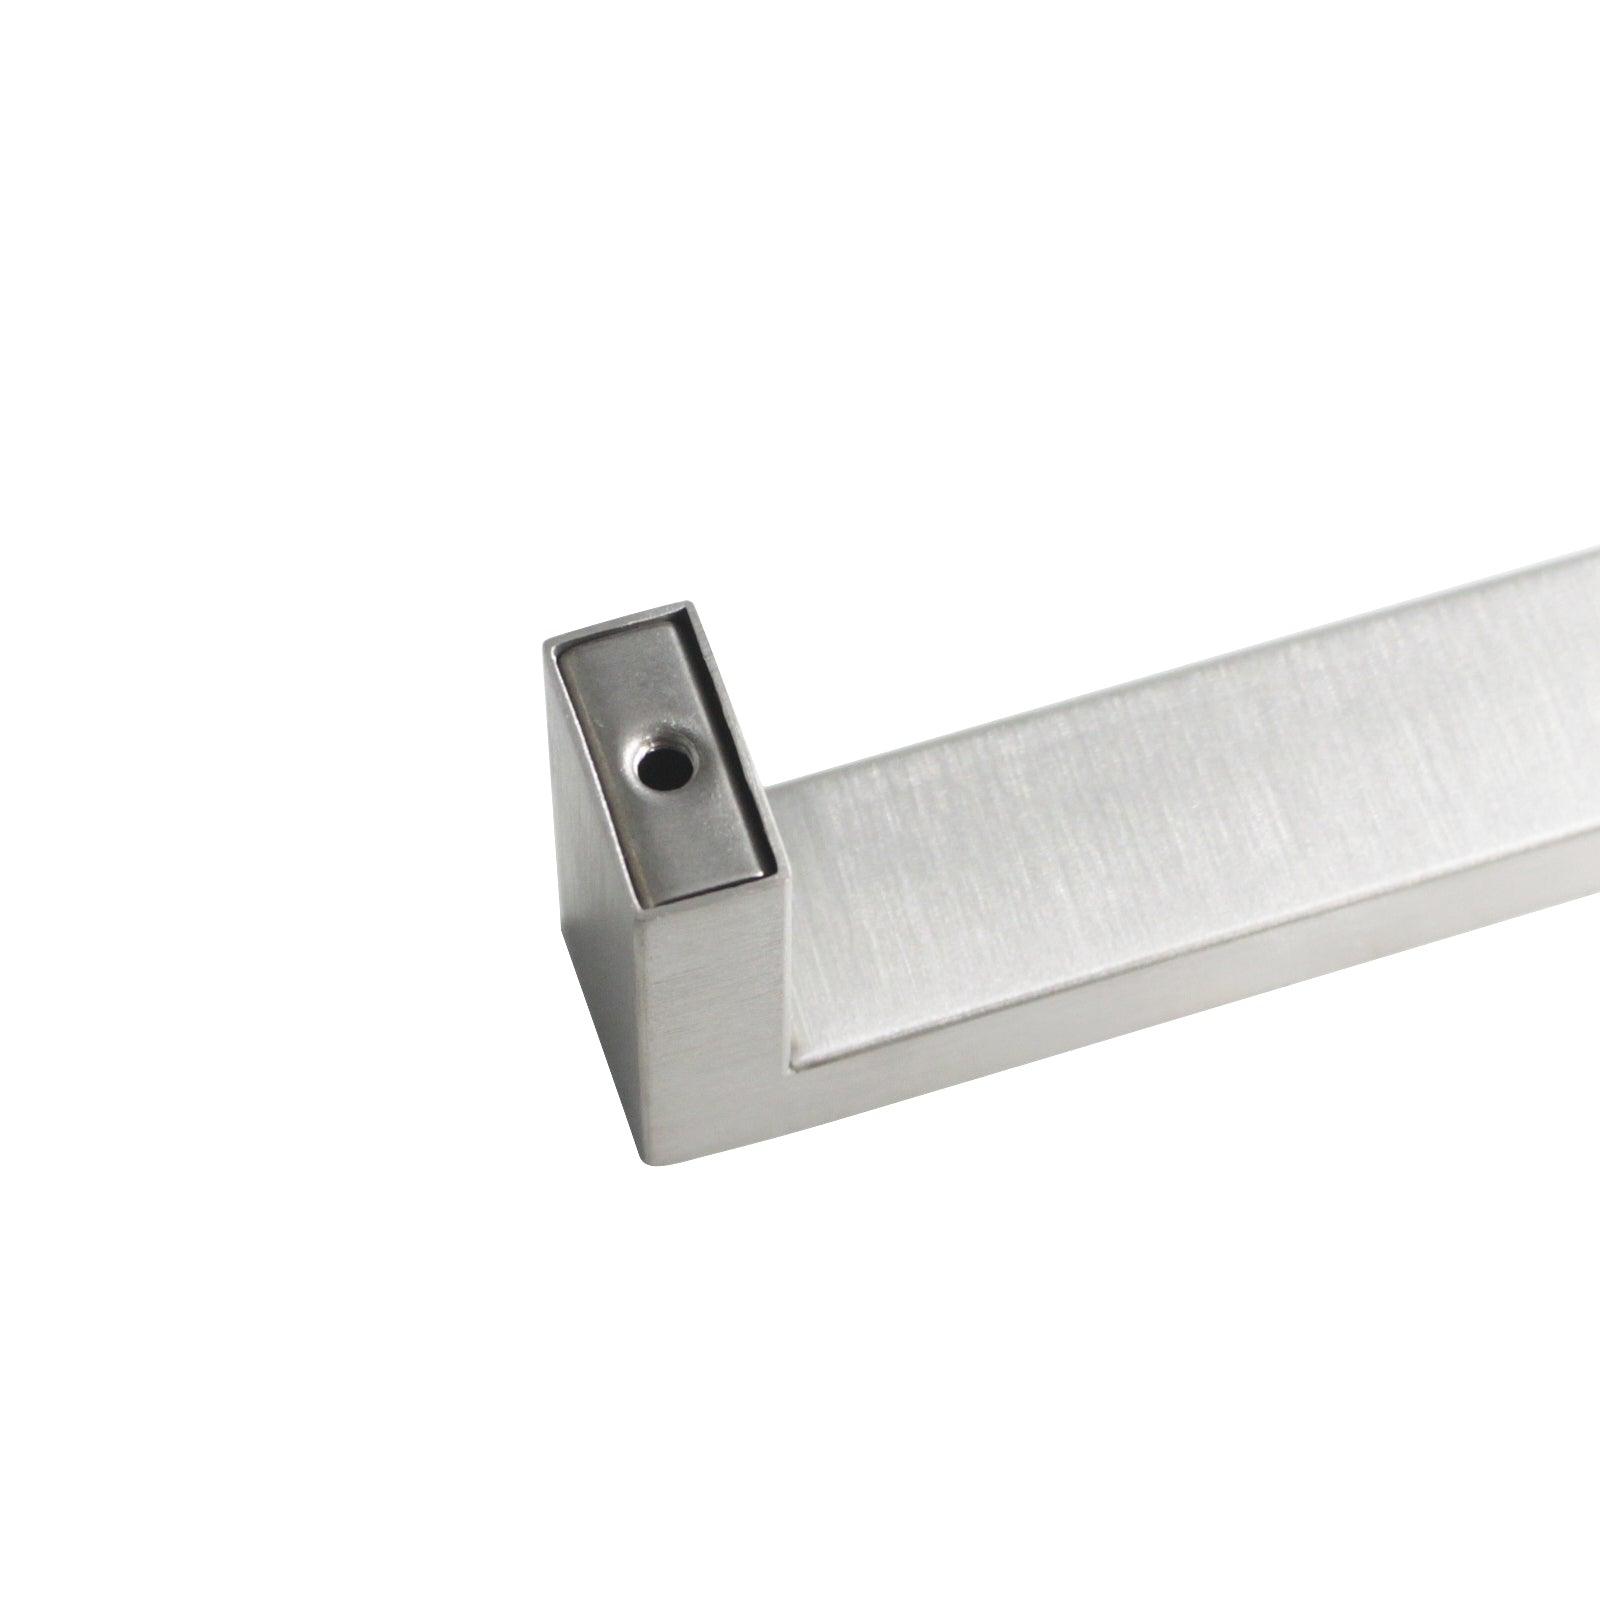 20mm Square Bar Cabinet Handles and Pulls Brushed Nickel Finish Kitchen Hardware PDDJ30HSS - Probrico